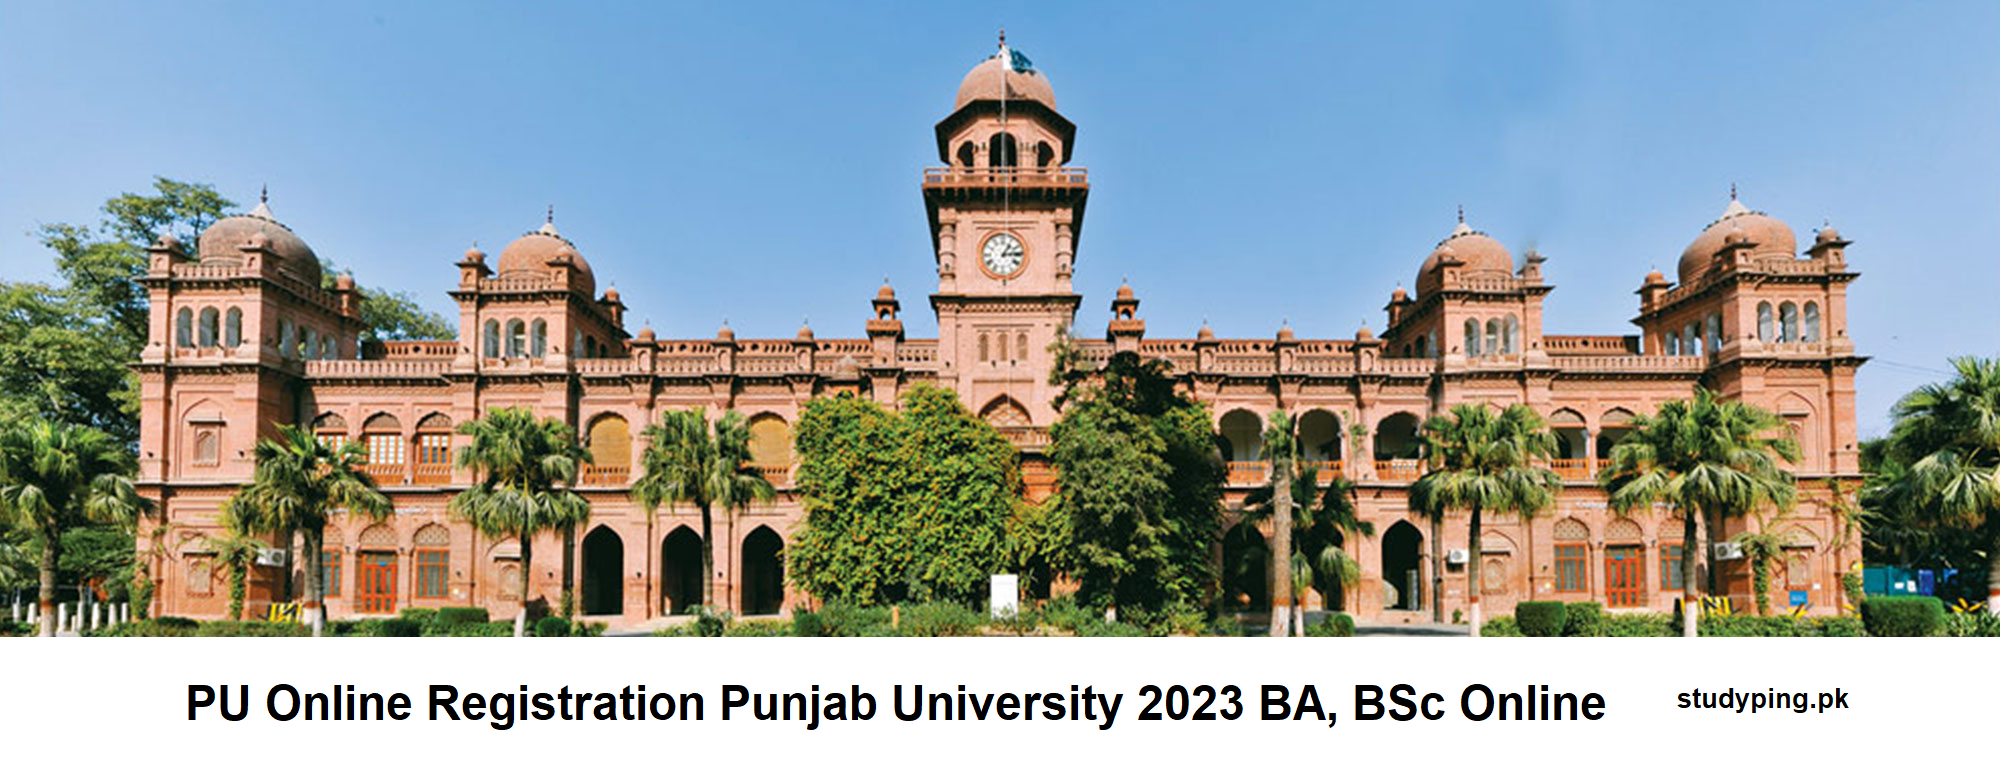 PU Online Registration Punjab University 2023 BA, BSc Online